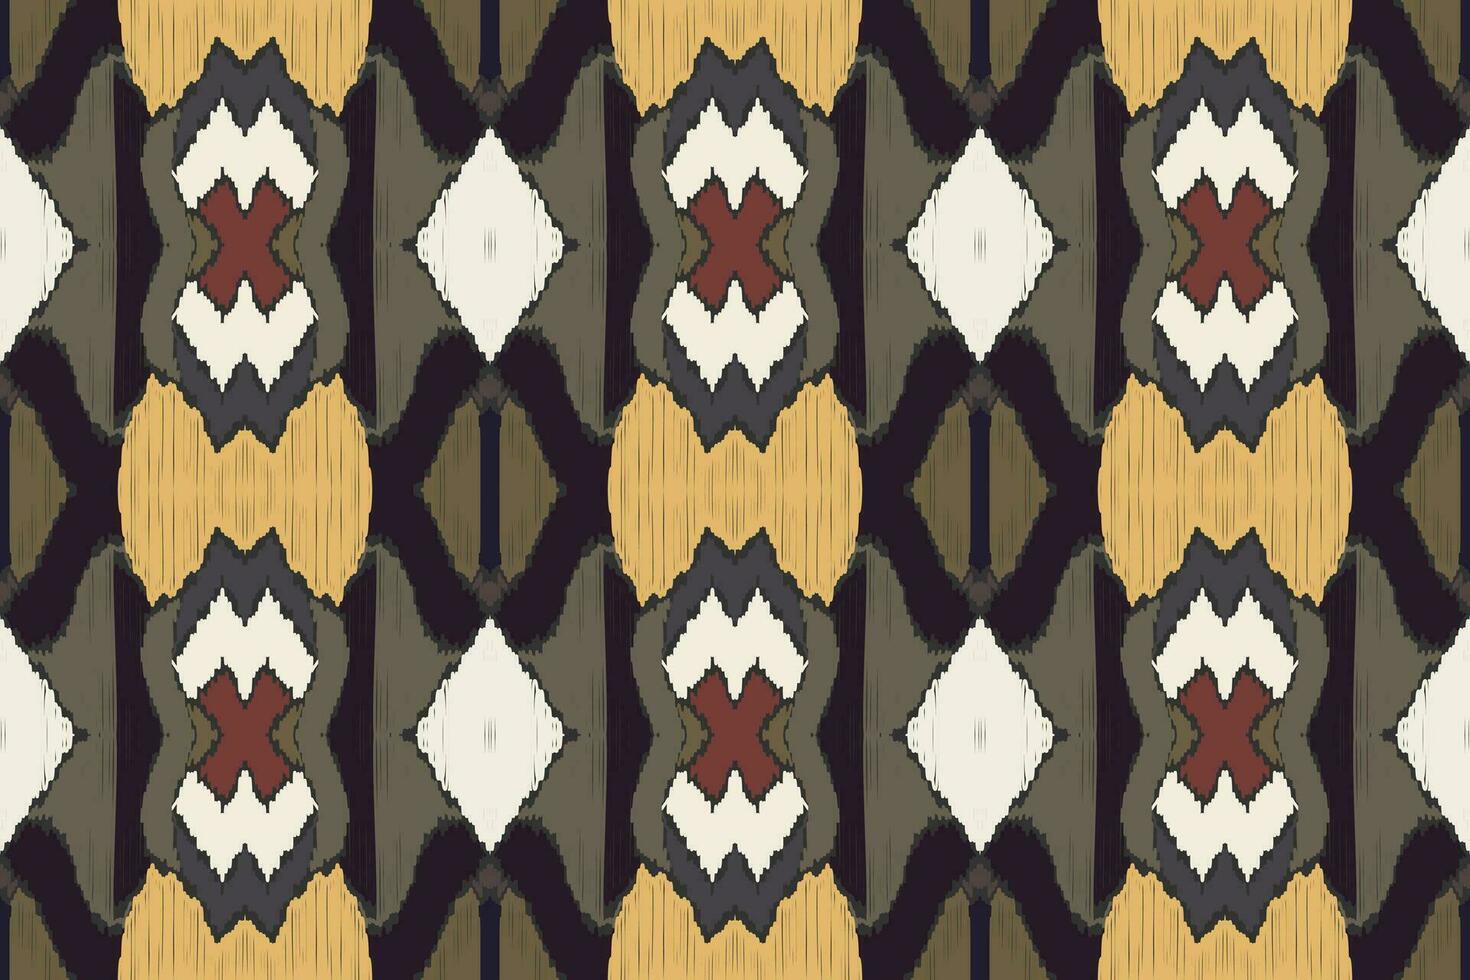 motivo ikat sin costura modelo bordado antecedentes. ikat damasco geométrico étnico oriental modelo tradicional. ikat azteca estilo resumen diseño para impresión textura,tela,sari,sari,alfombra. vector